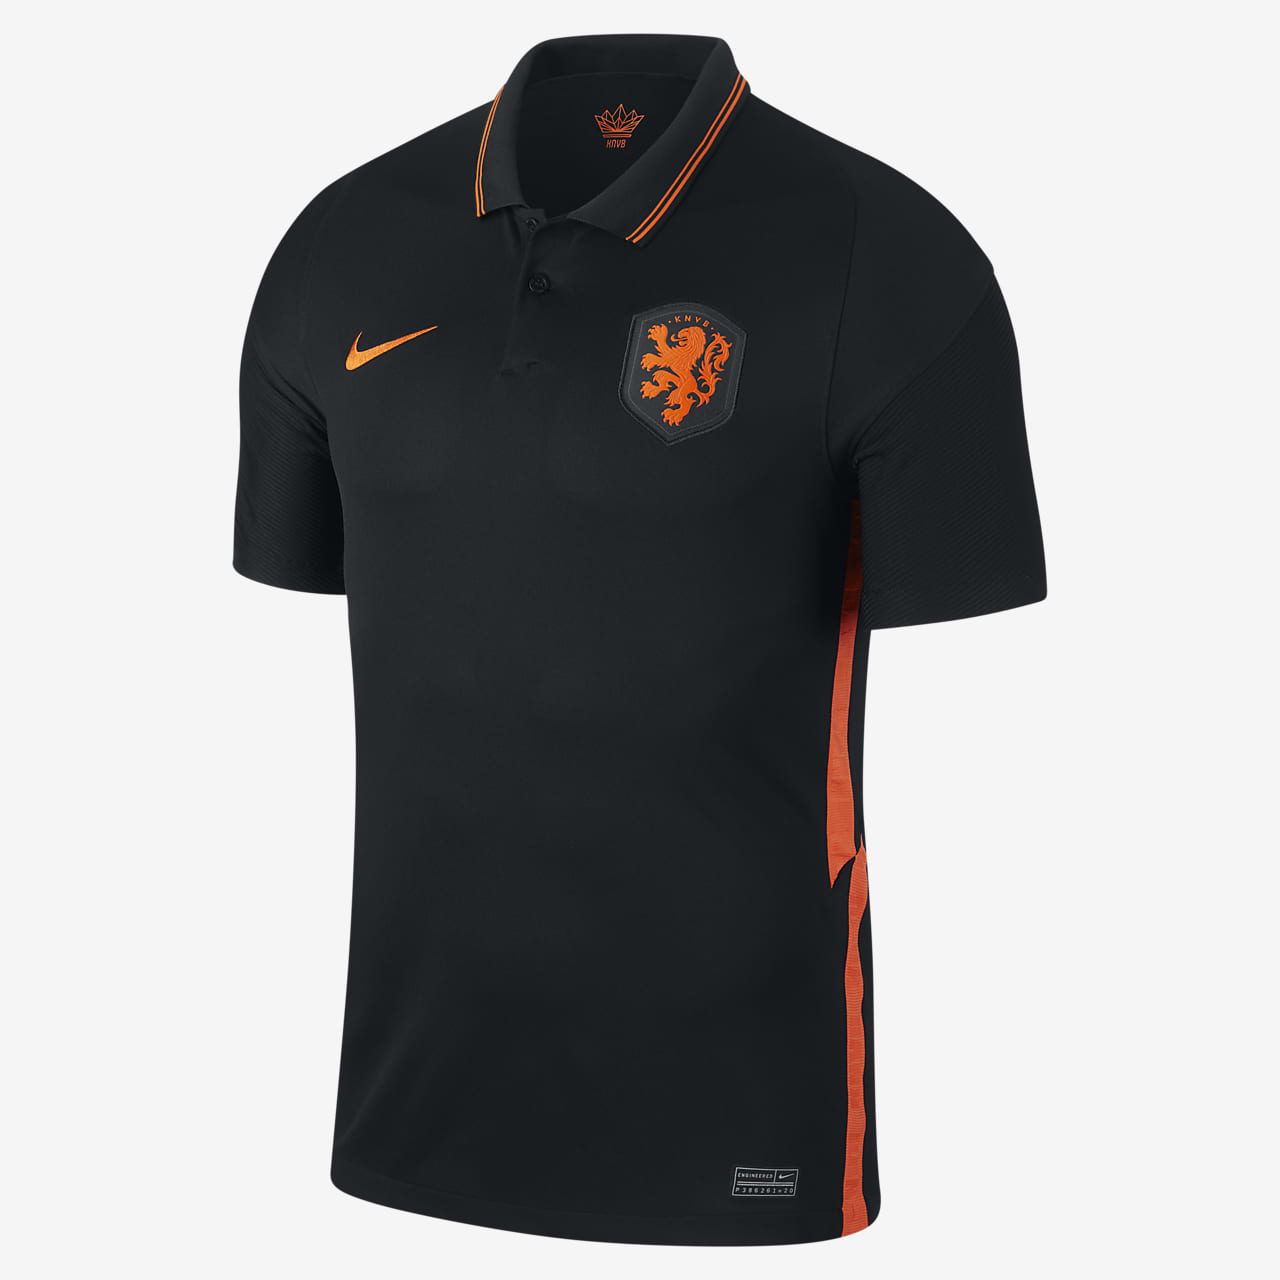 the netherlands soccer jersey